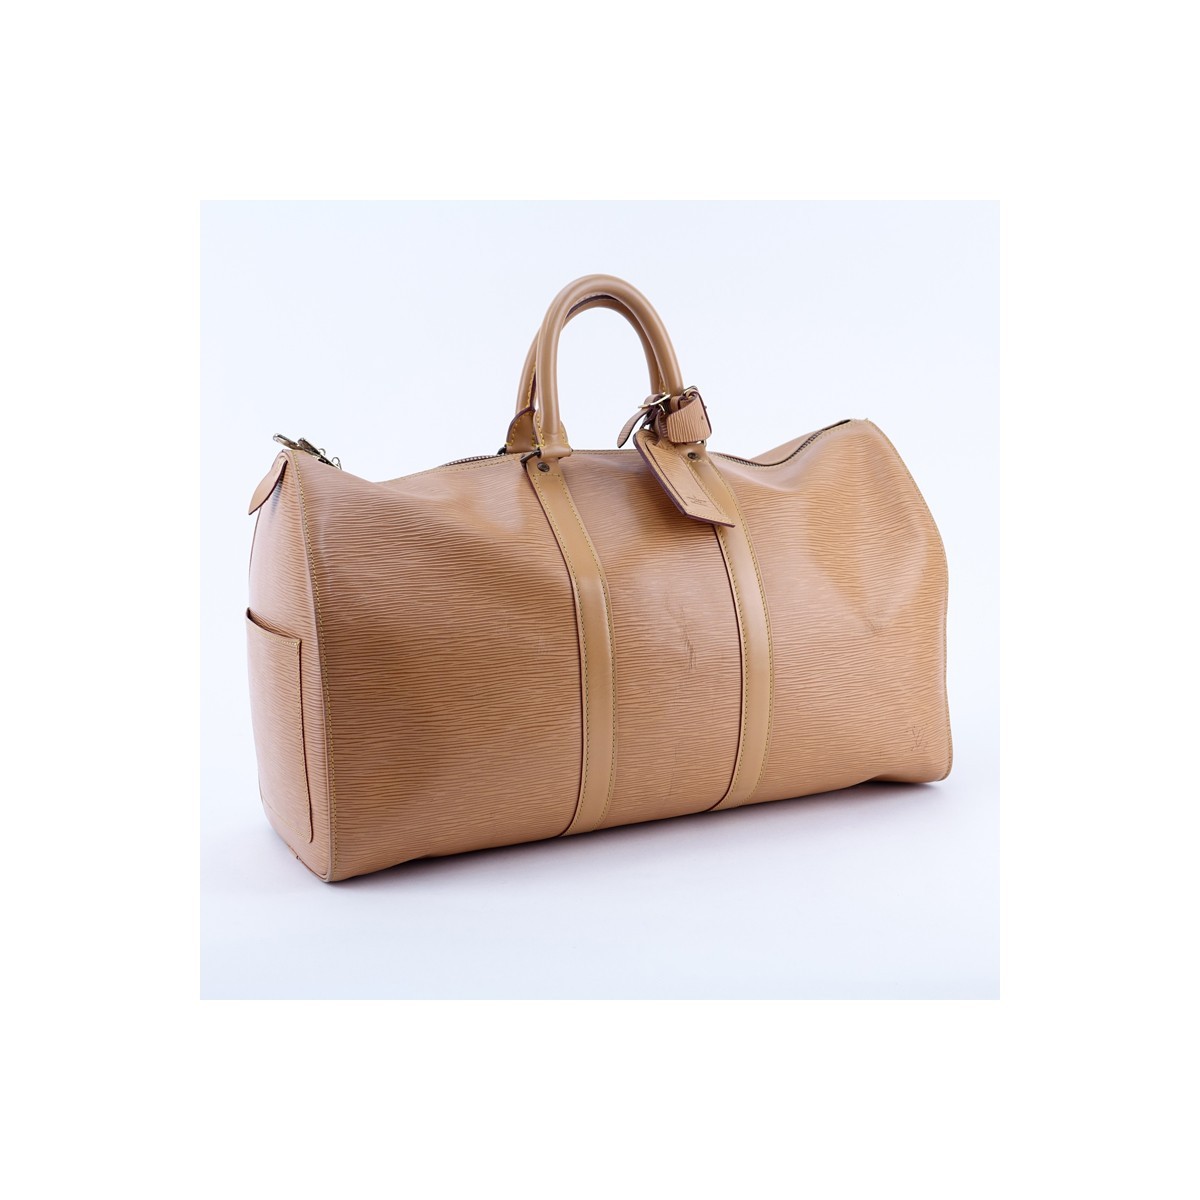 Louis Vuitton Light Beige Epi Leather Keepall Travel Bag. Golden brass hardware, beige leather interior, luggage tag.